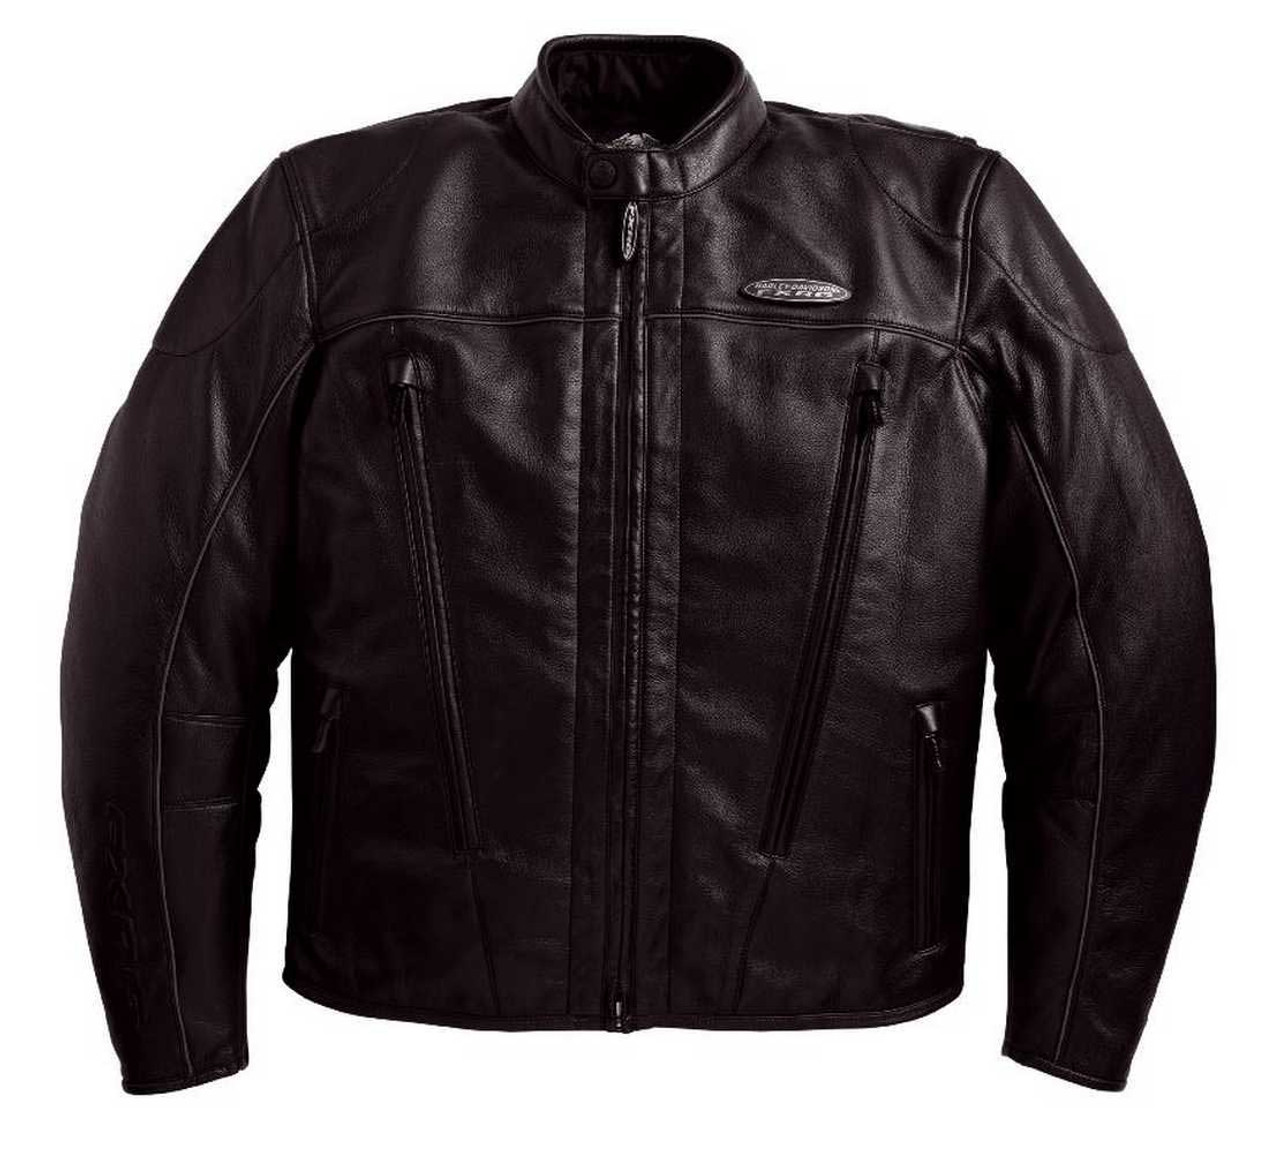 Harley-Davidson FXRG Leather Motorcycle Jacket 98519-05vm 2xl for